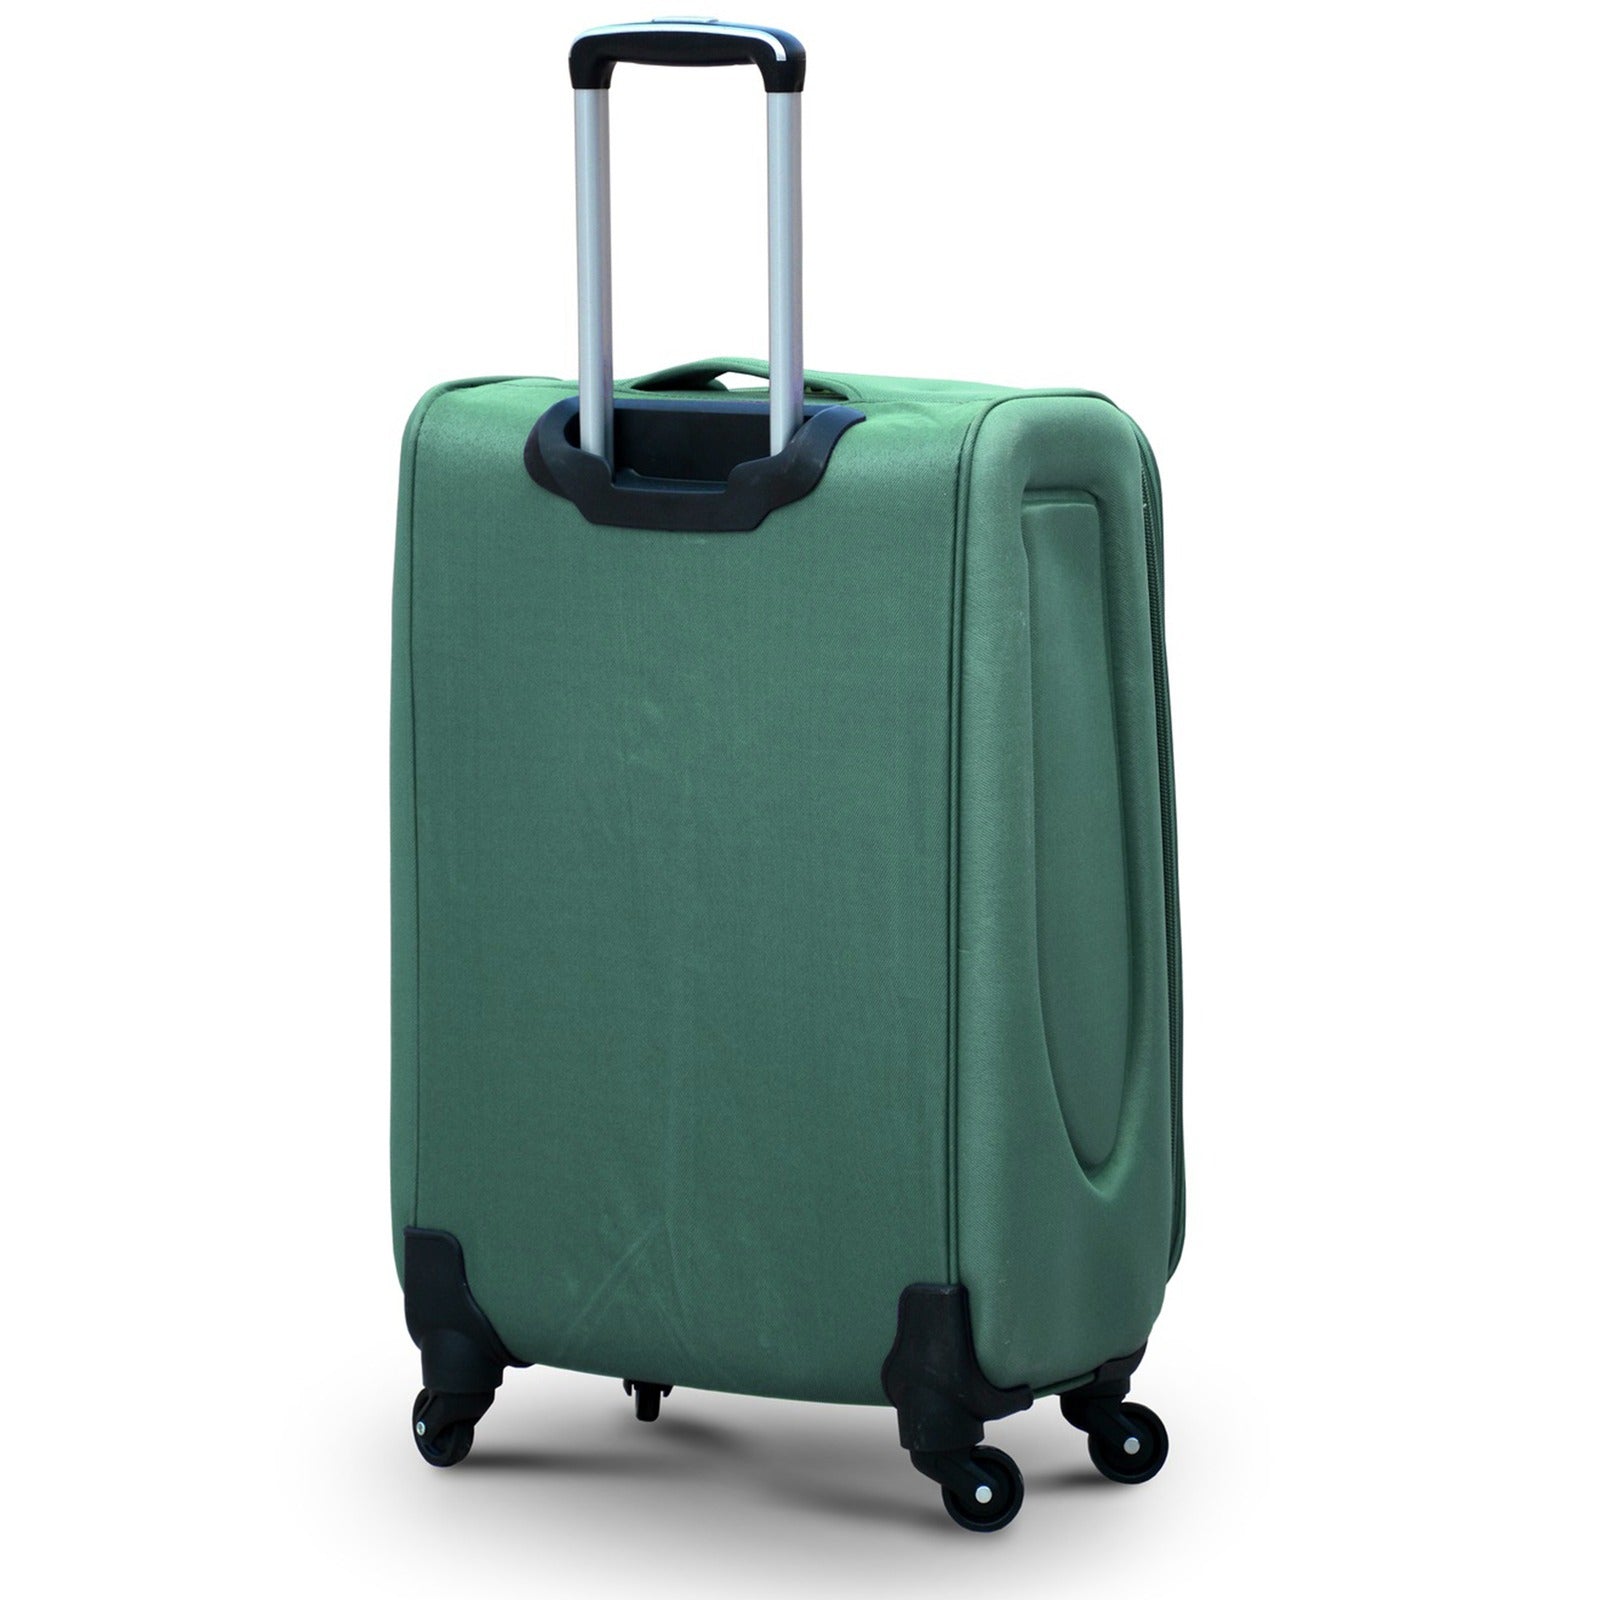 24" Green Colour SJ JIAN 4 Wheel Luggage Lightweight Soft Material Trolley Bag Zaappy.com